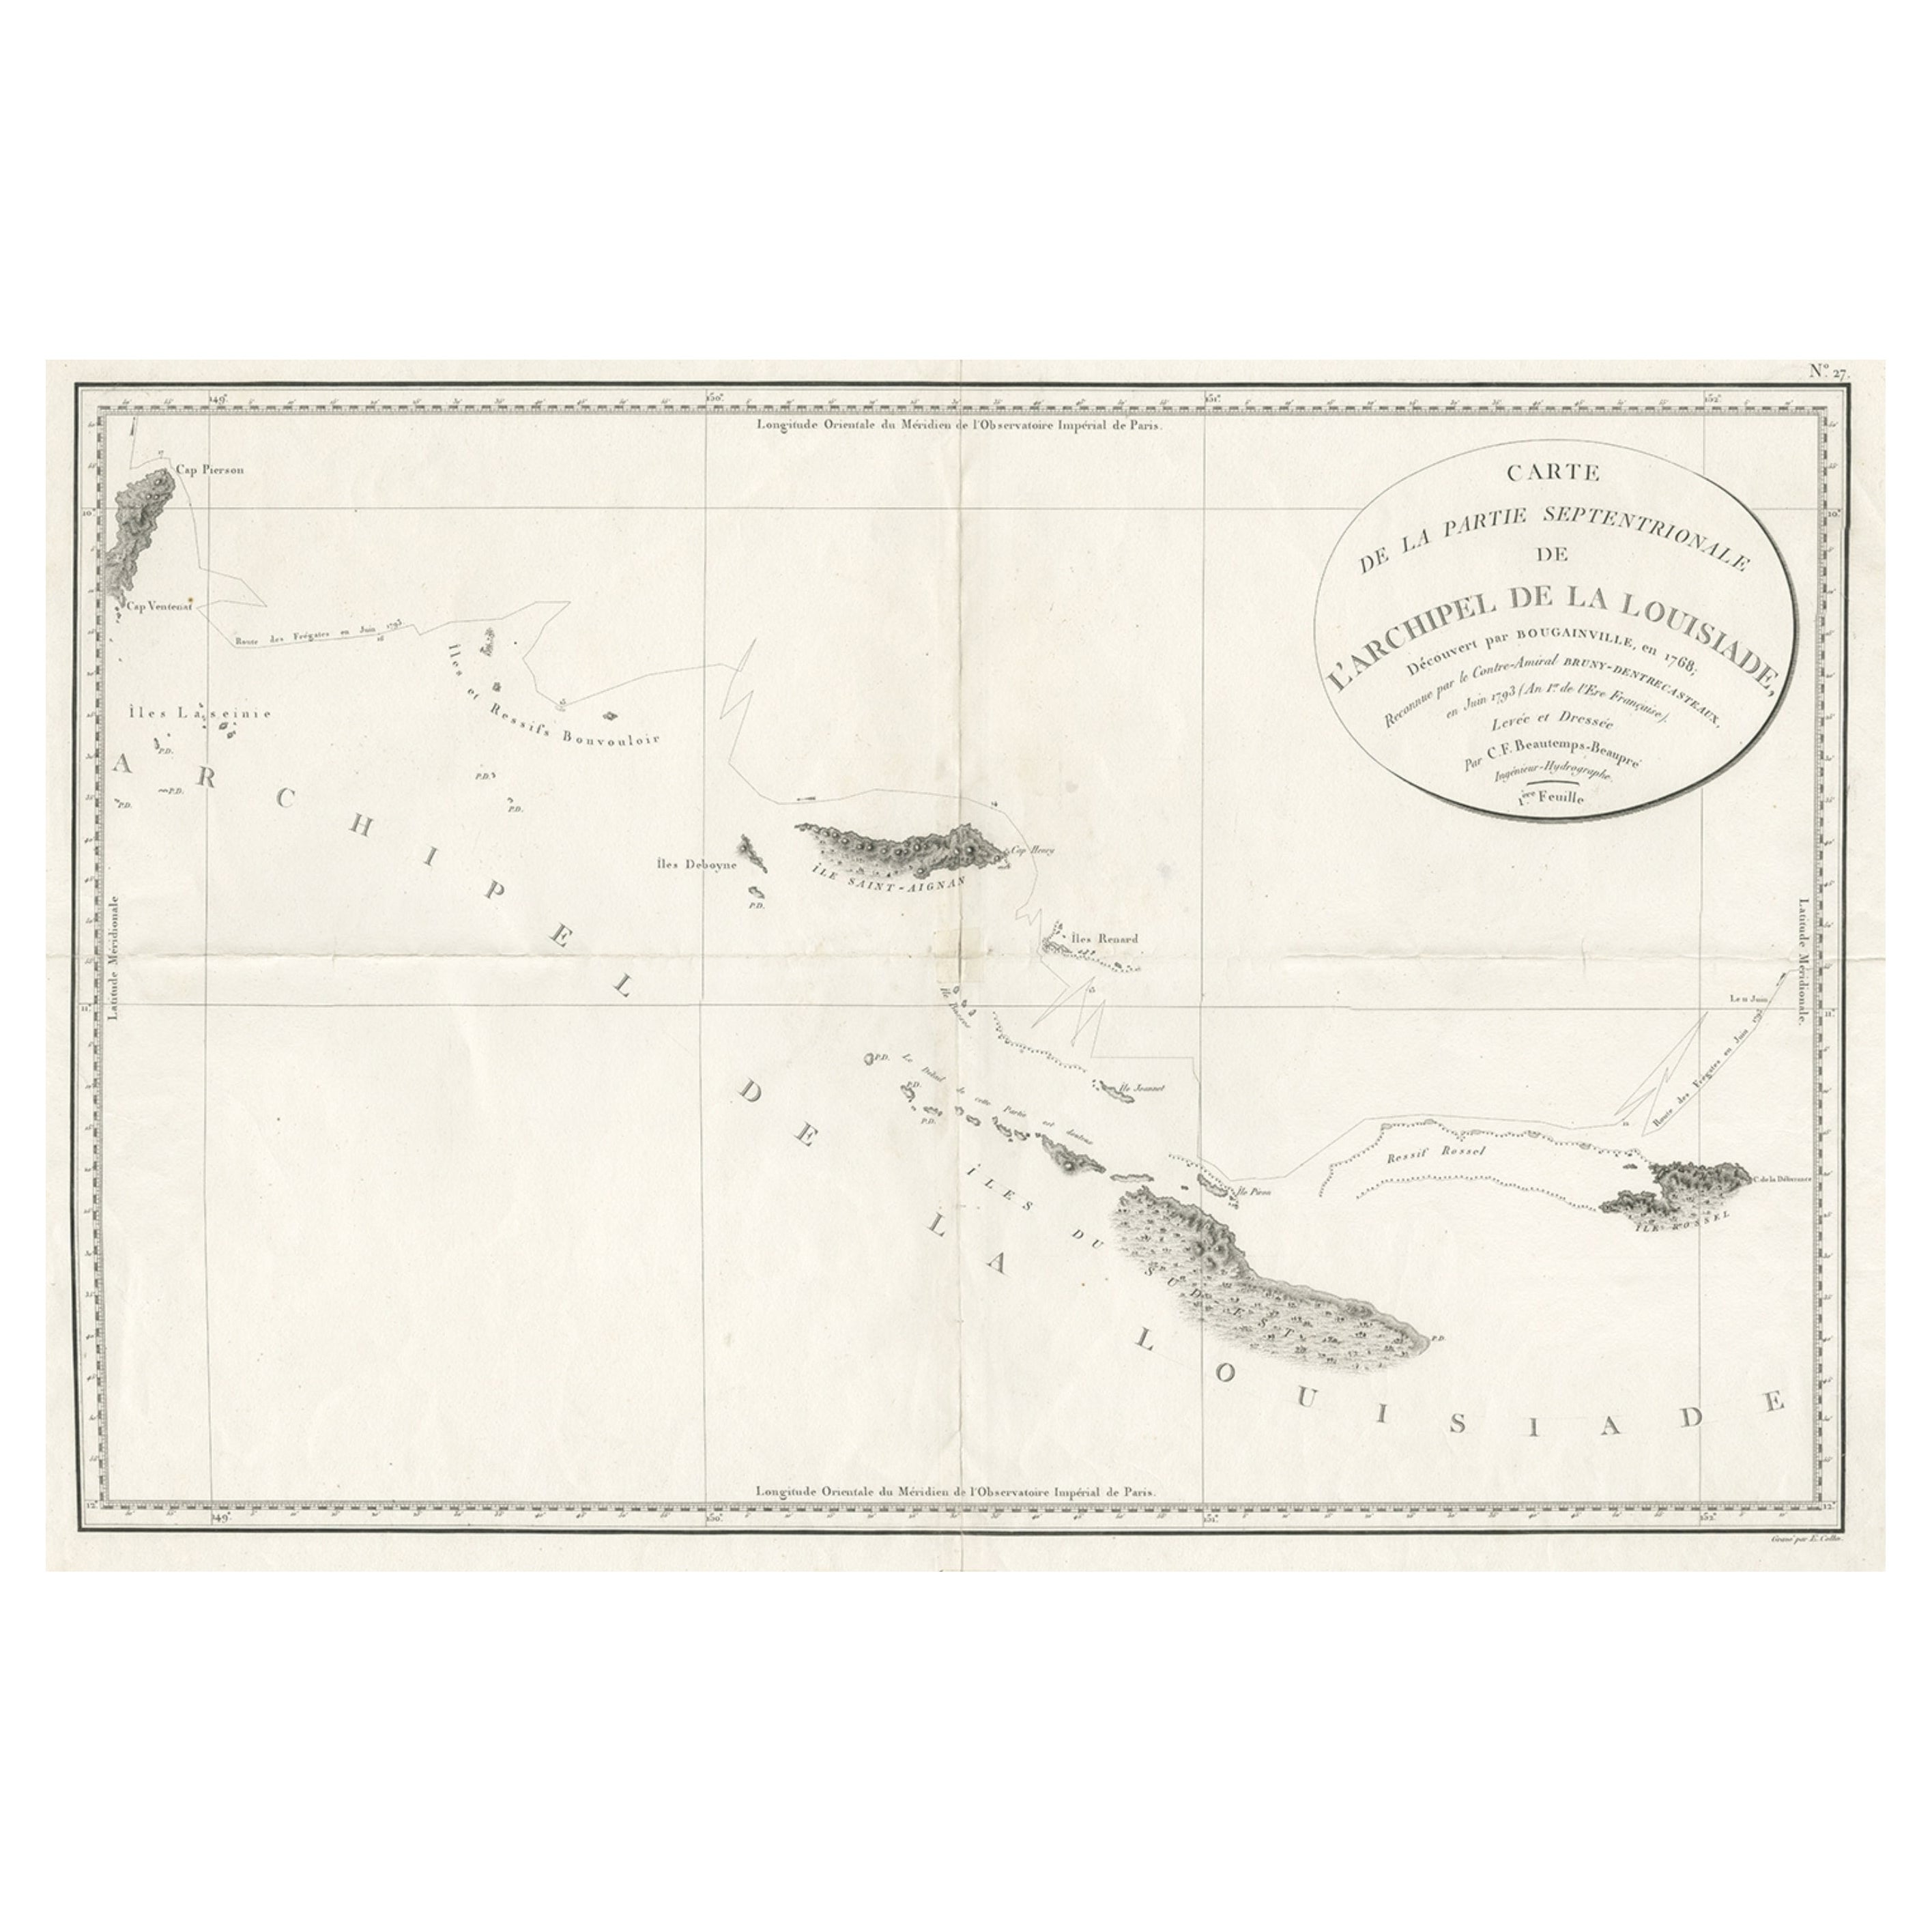 Uncommon Rare Map Showing The Louisiade Archipelago, Papua New Guinea, ca.1798